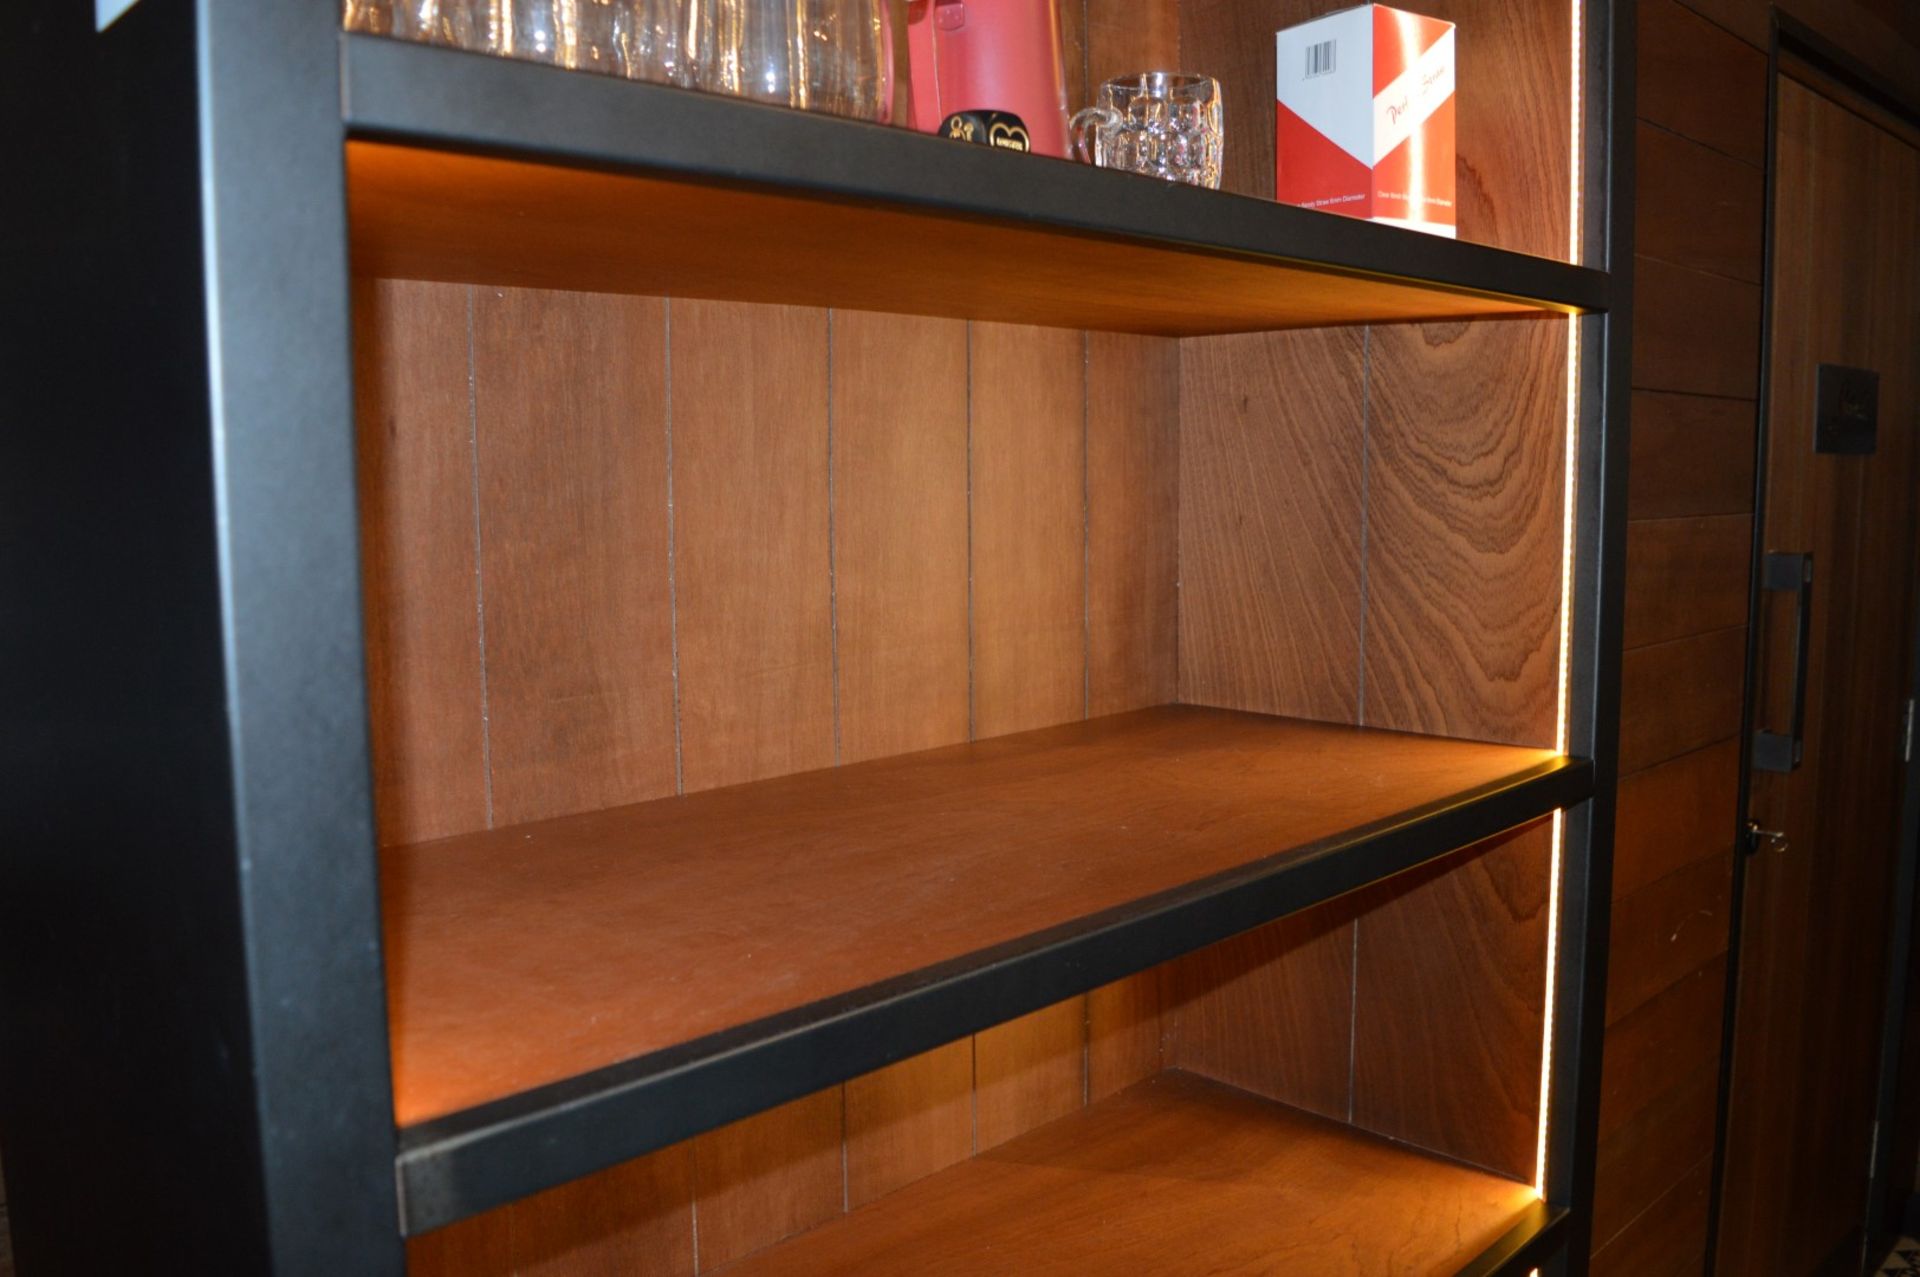 1 x Bespoke Illuminated Bookshelf - Contemporary 5 Tier Shelving Unit With LED Strip Lighting and - Image 3 of 4